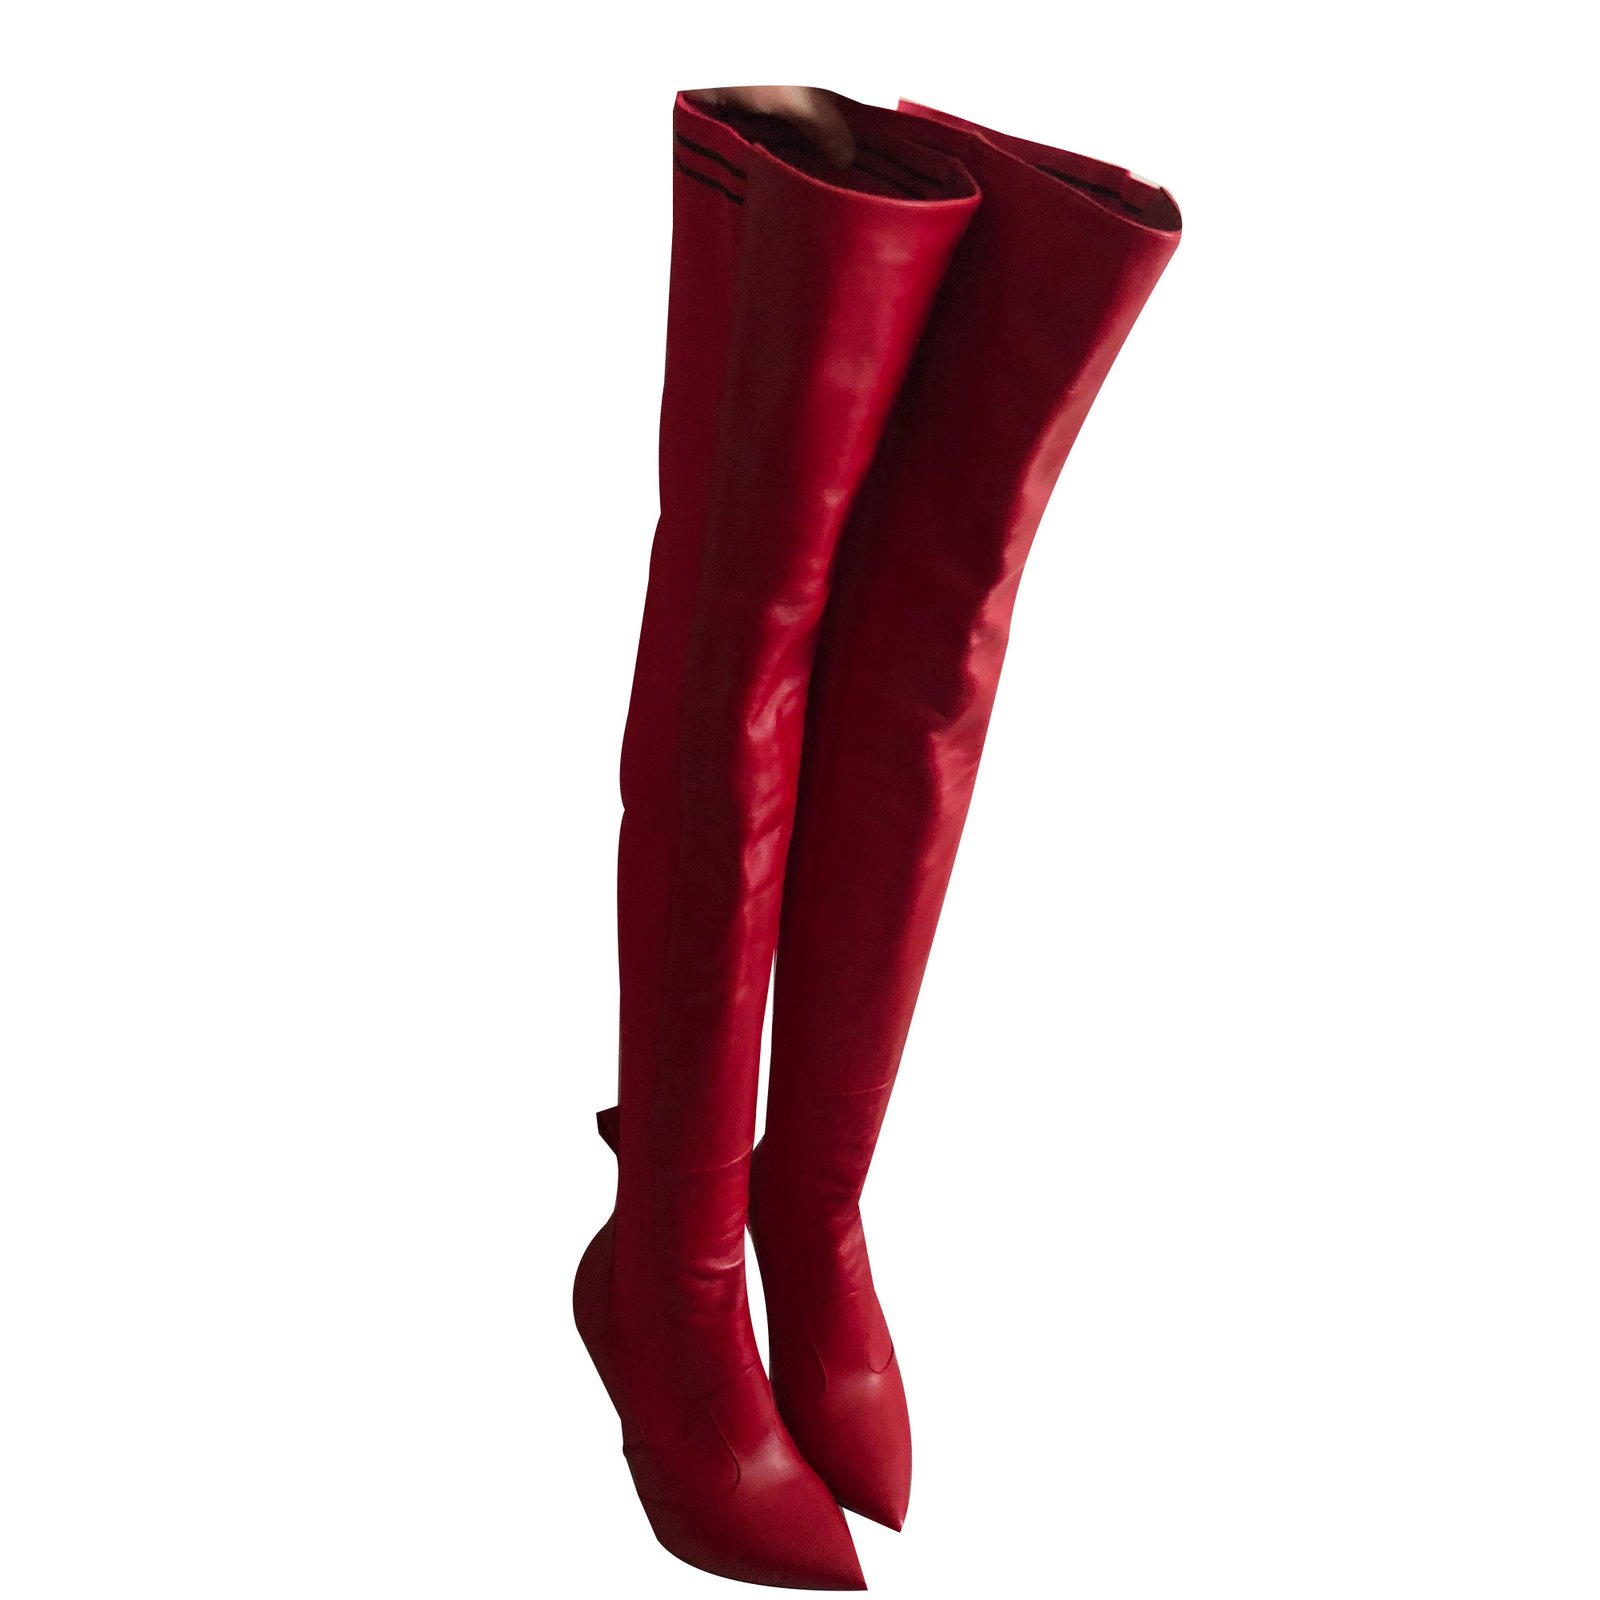 fendi boots red